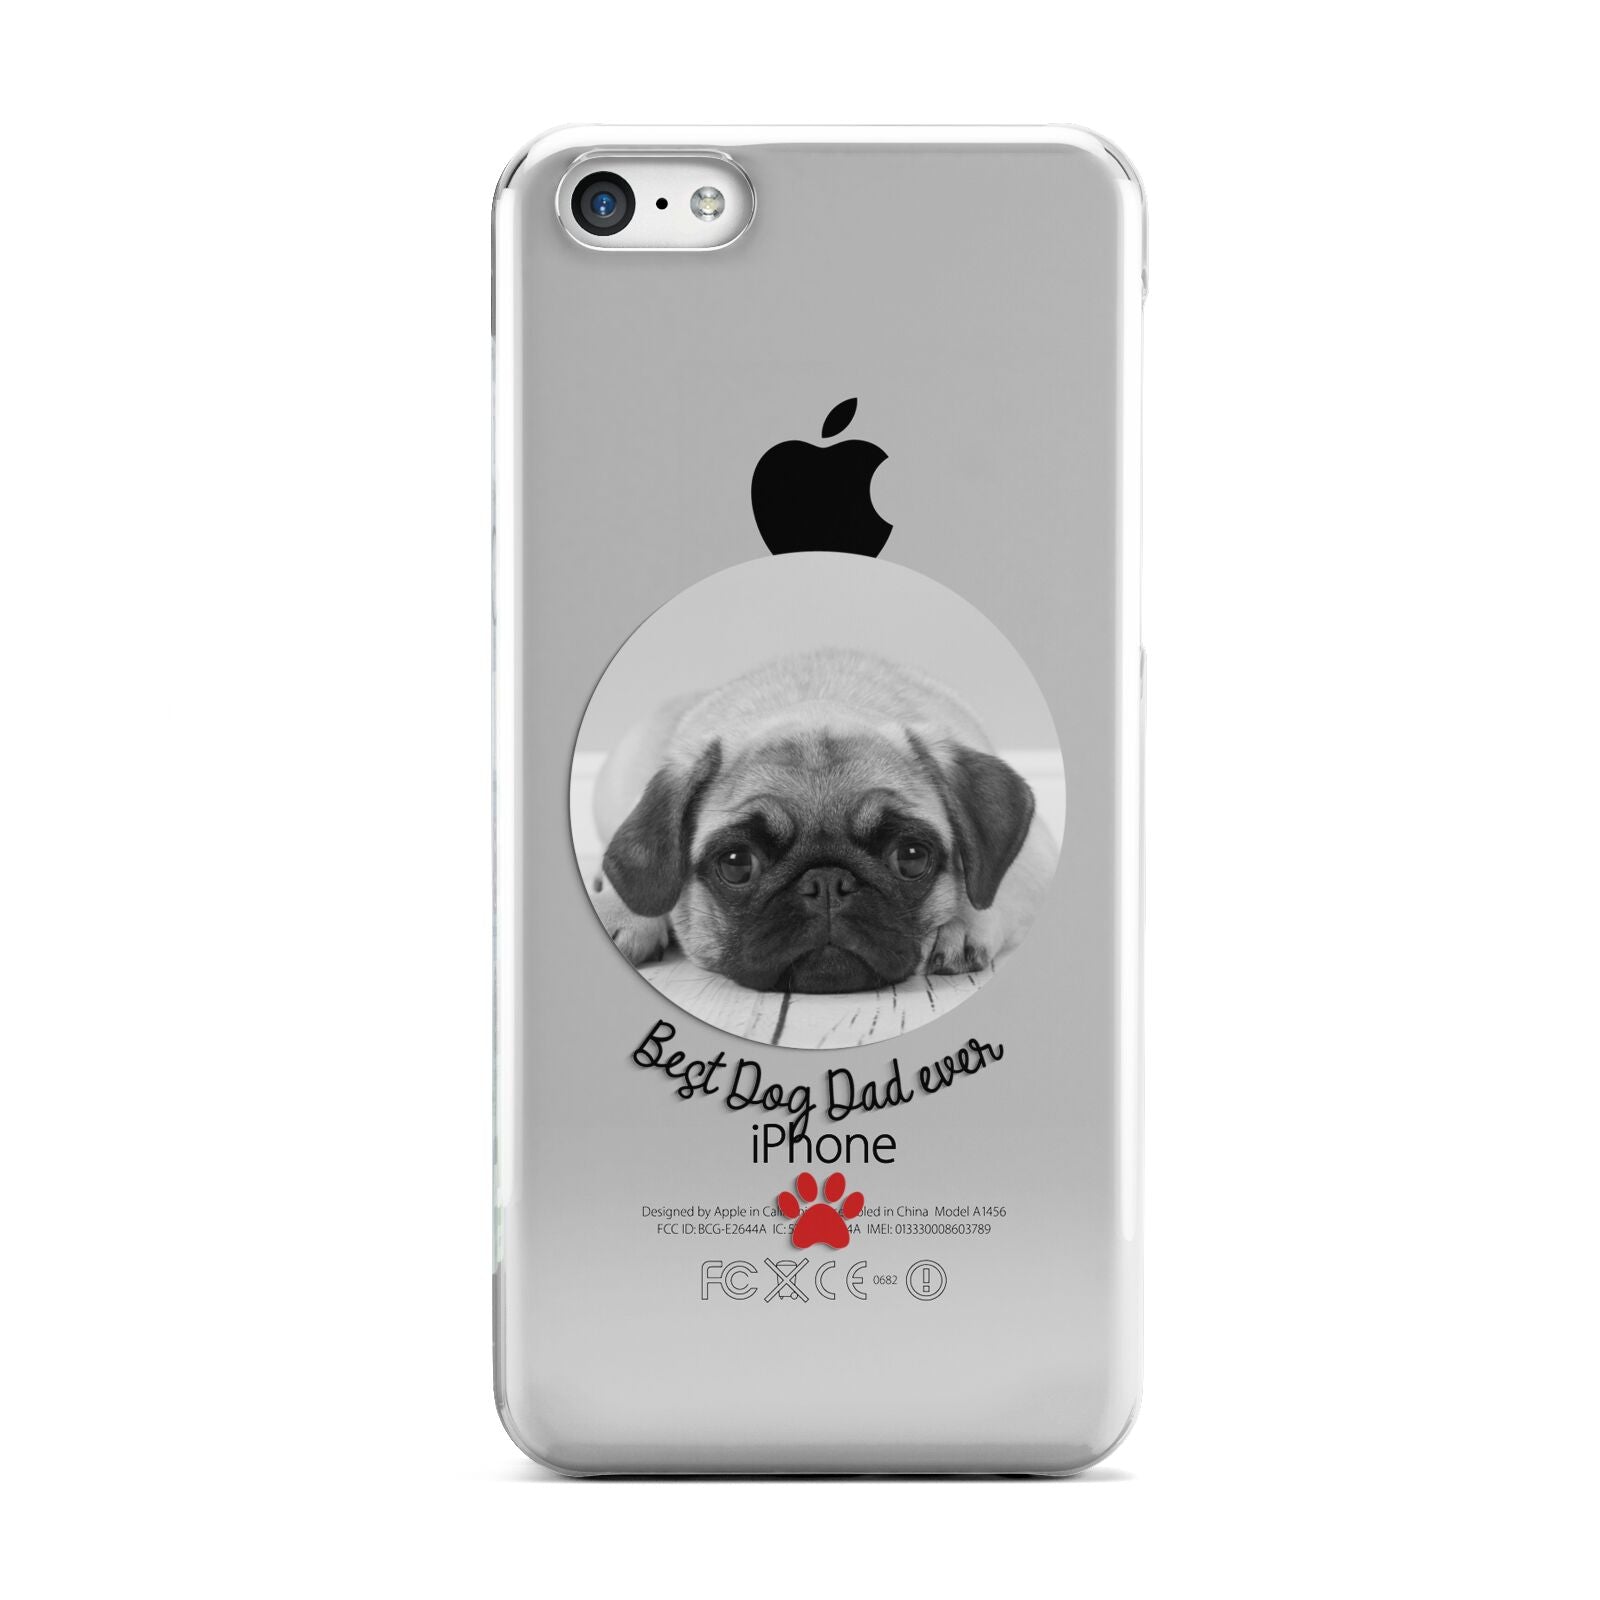 Best Dog Dad Ever Photo Upload Apple iPhone 5c Case